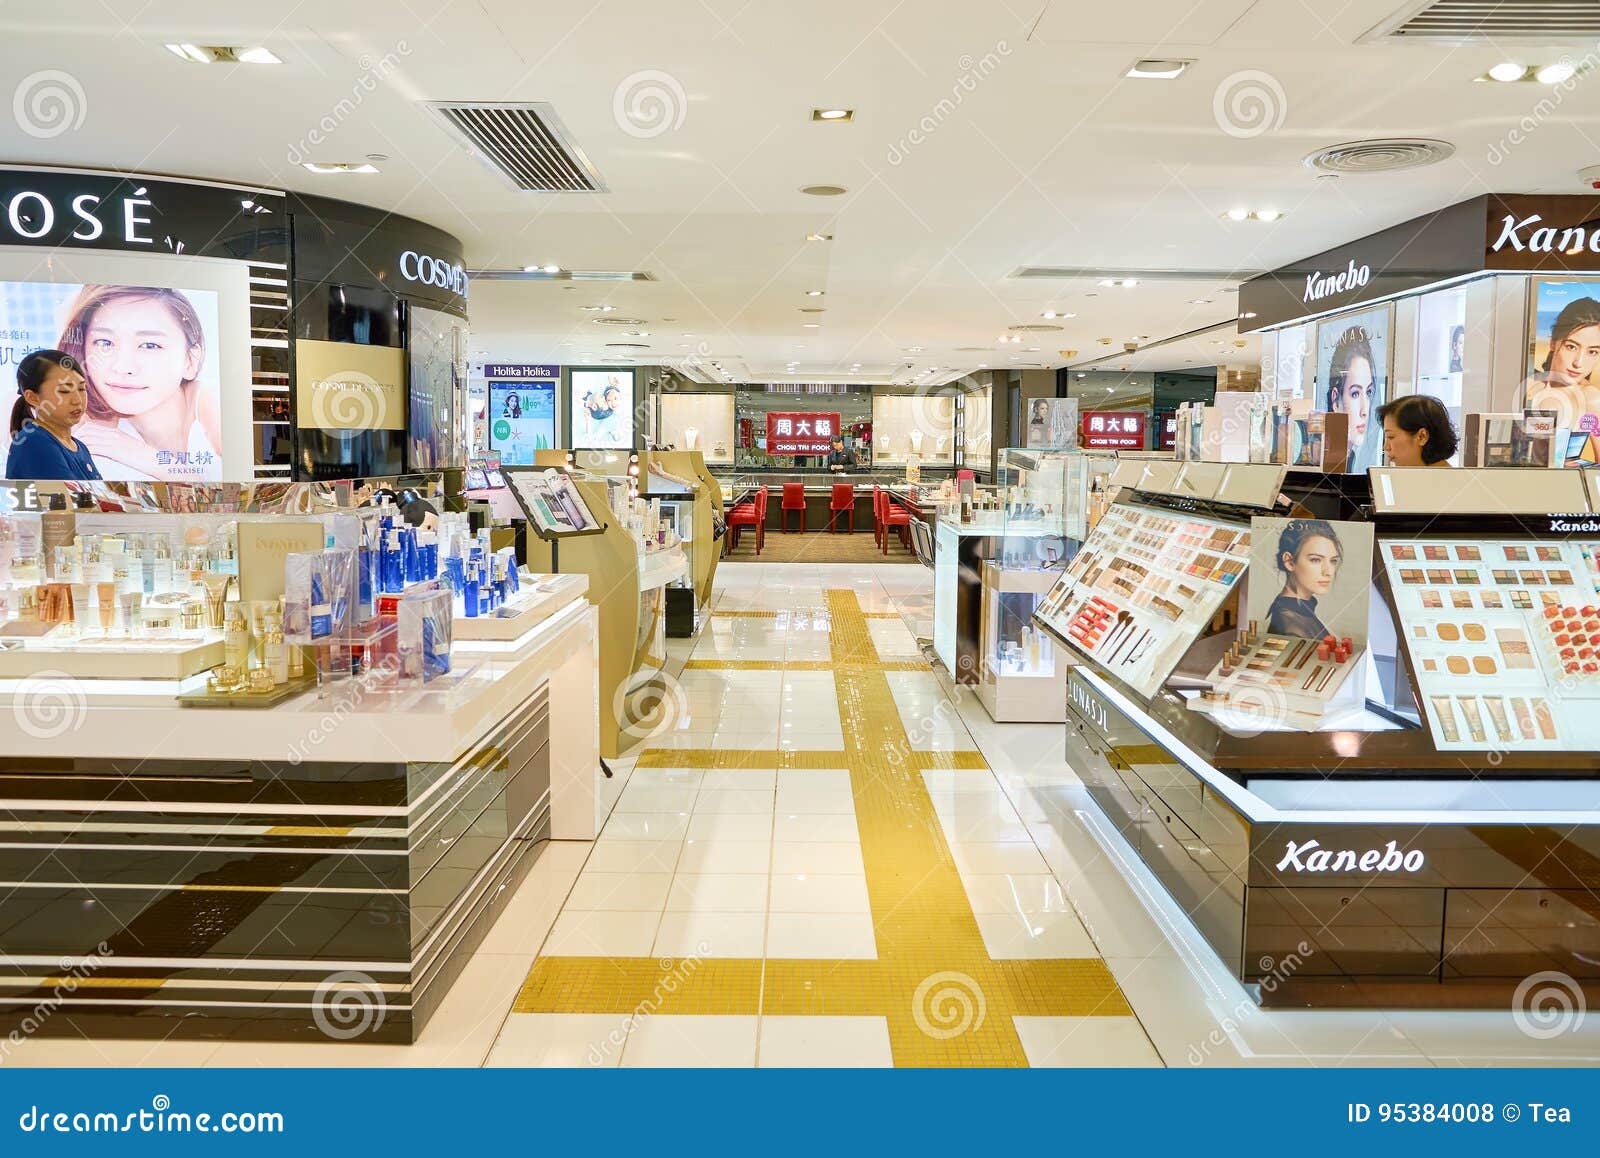 Cosmetics editorial stock photo. Image of market, cosmetic - 95384008